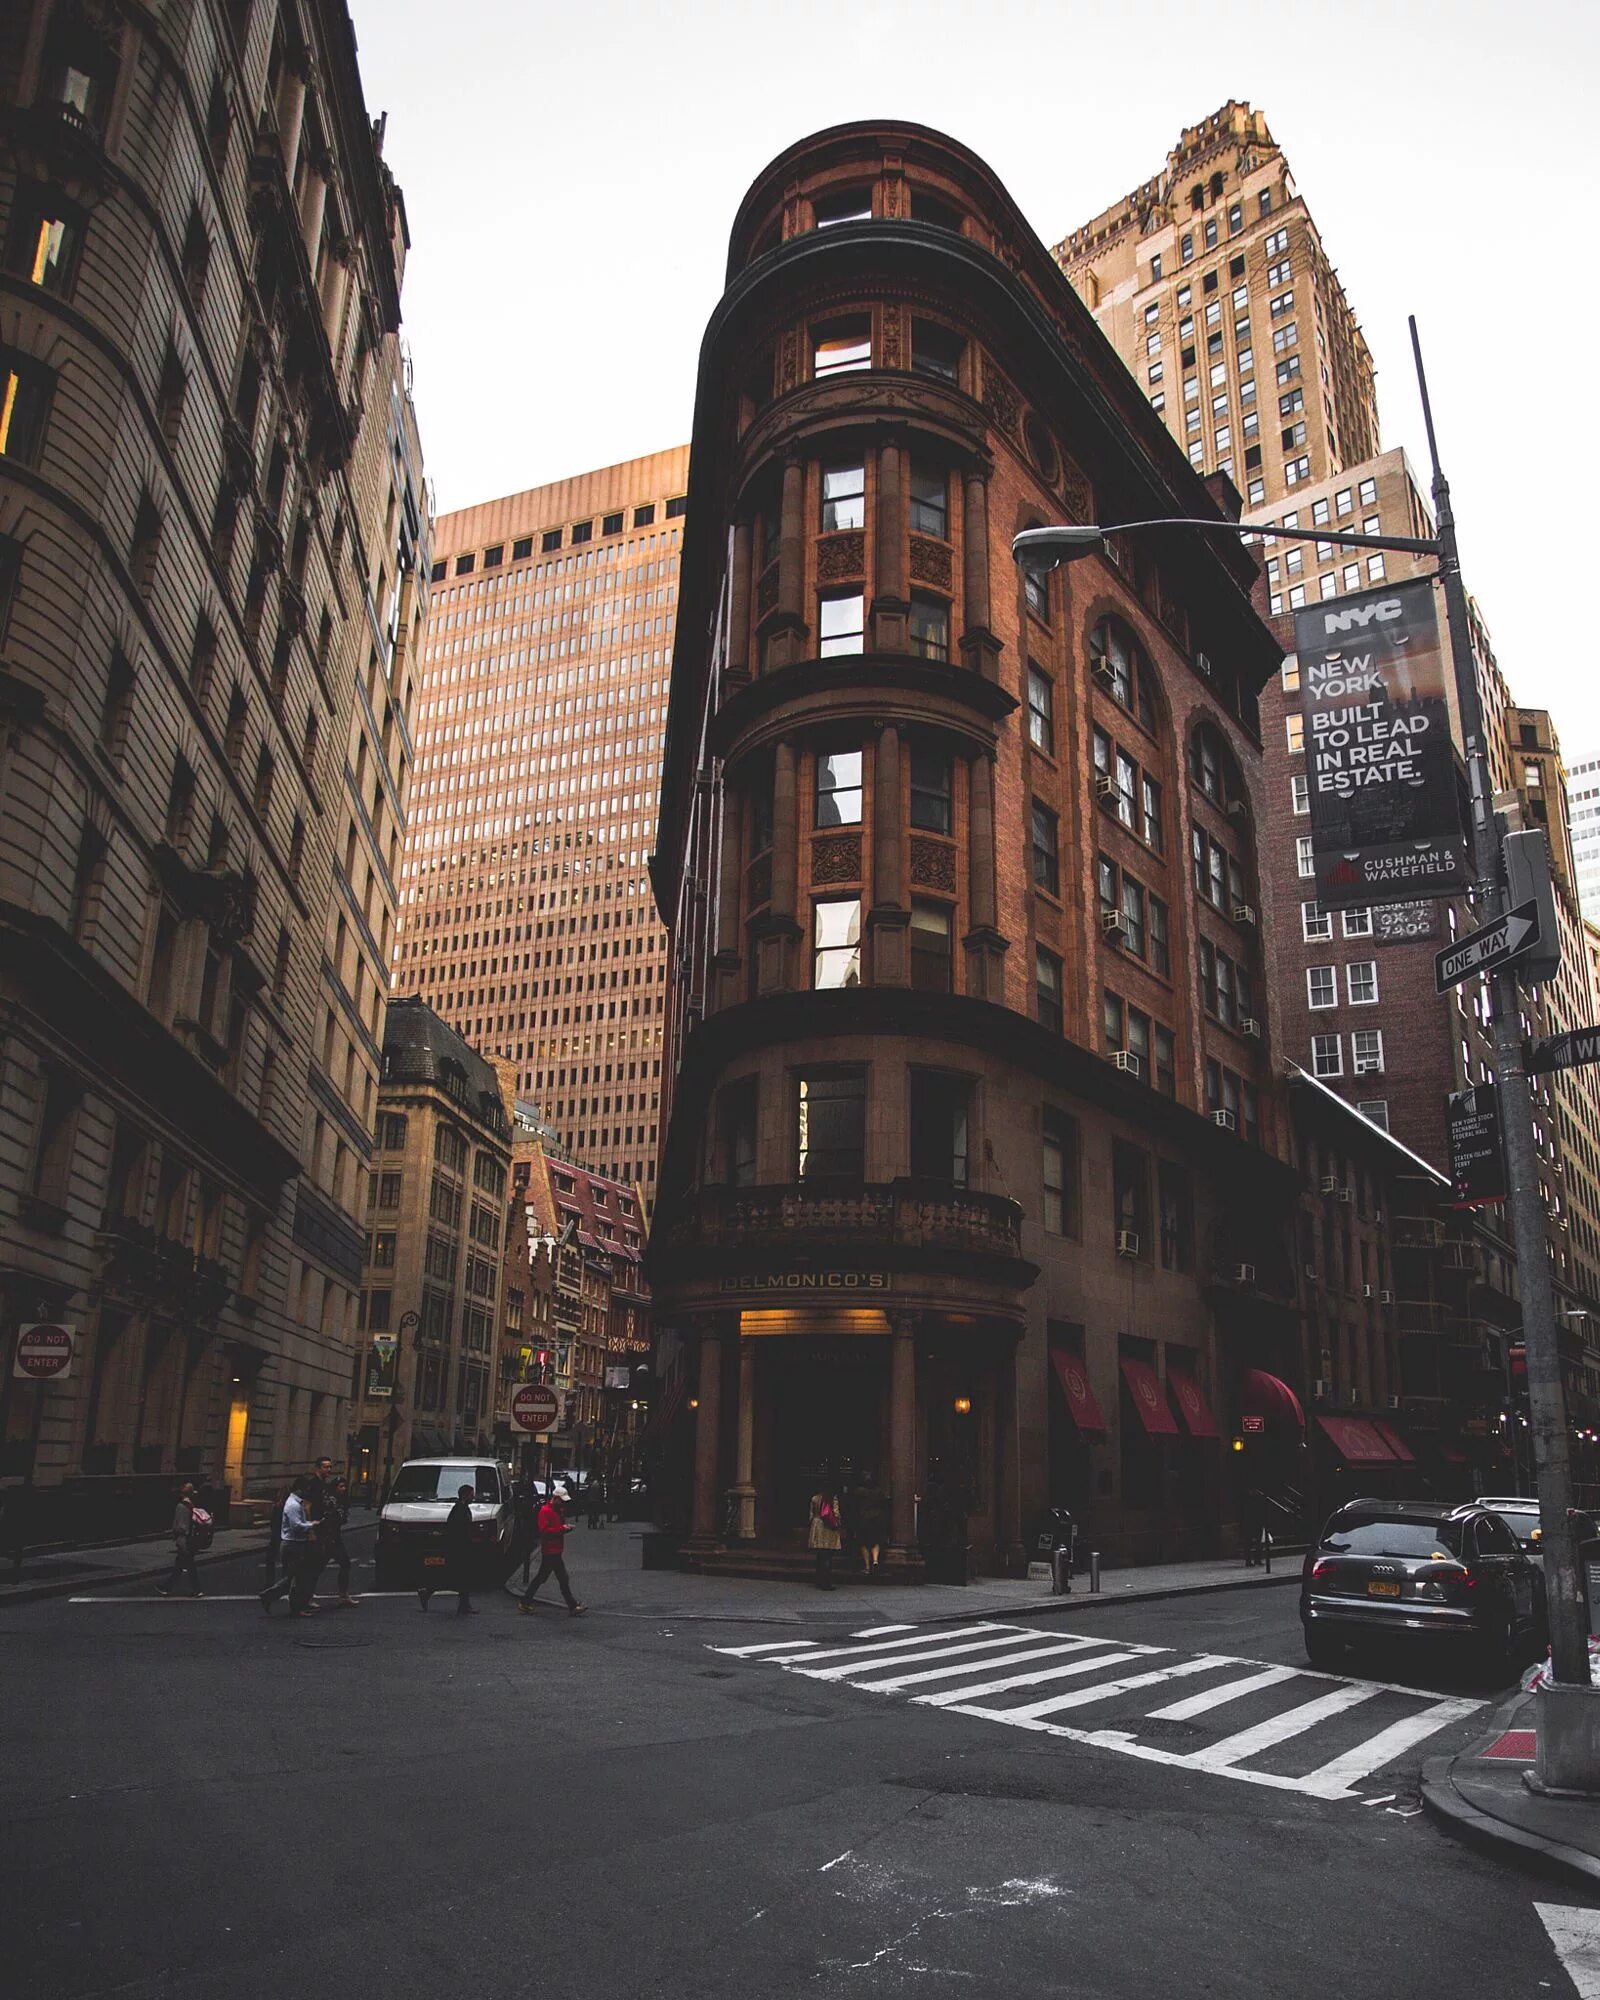 Brown city. Дельмонико Нью-Йорк здание. Дельмонико Нью-Йорк картина. Нью Йорк aesthetic улица. Архитектура города.